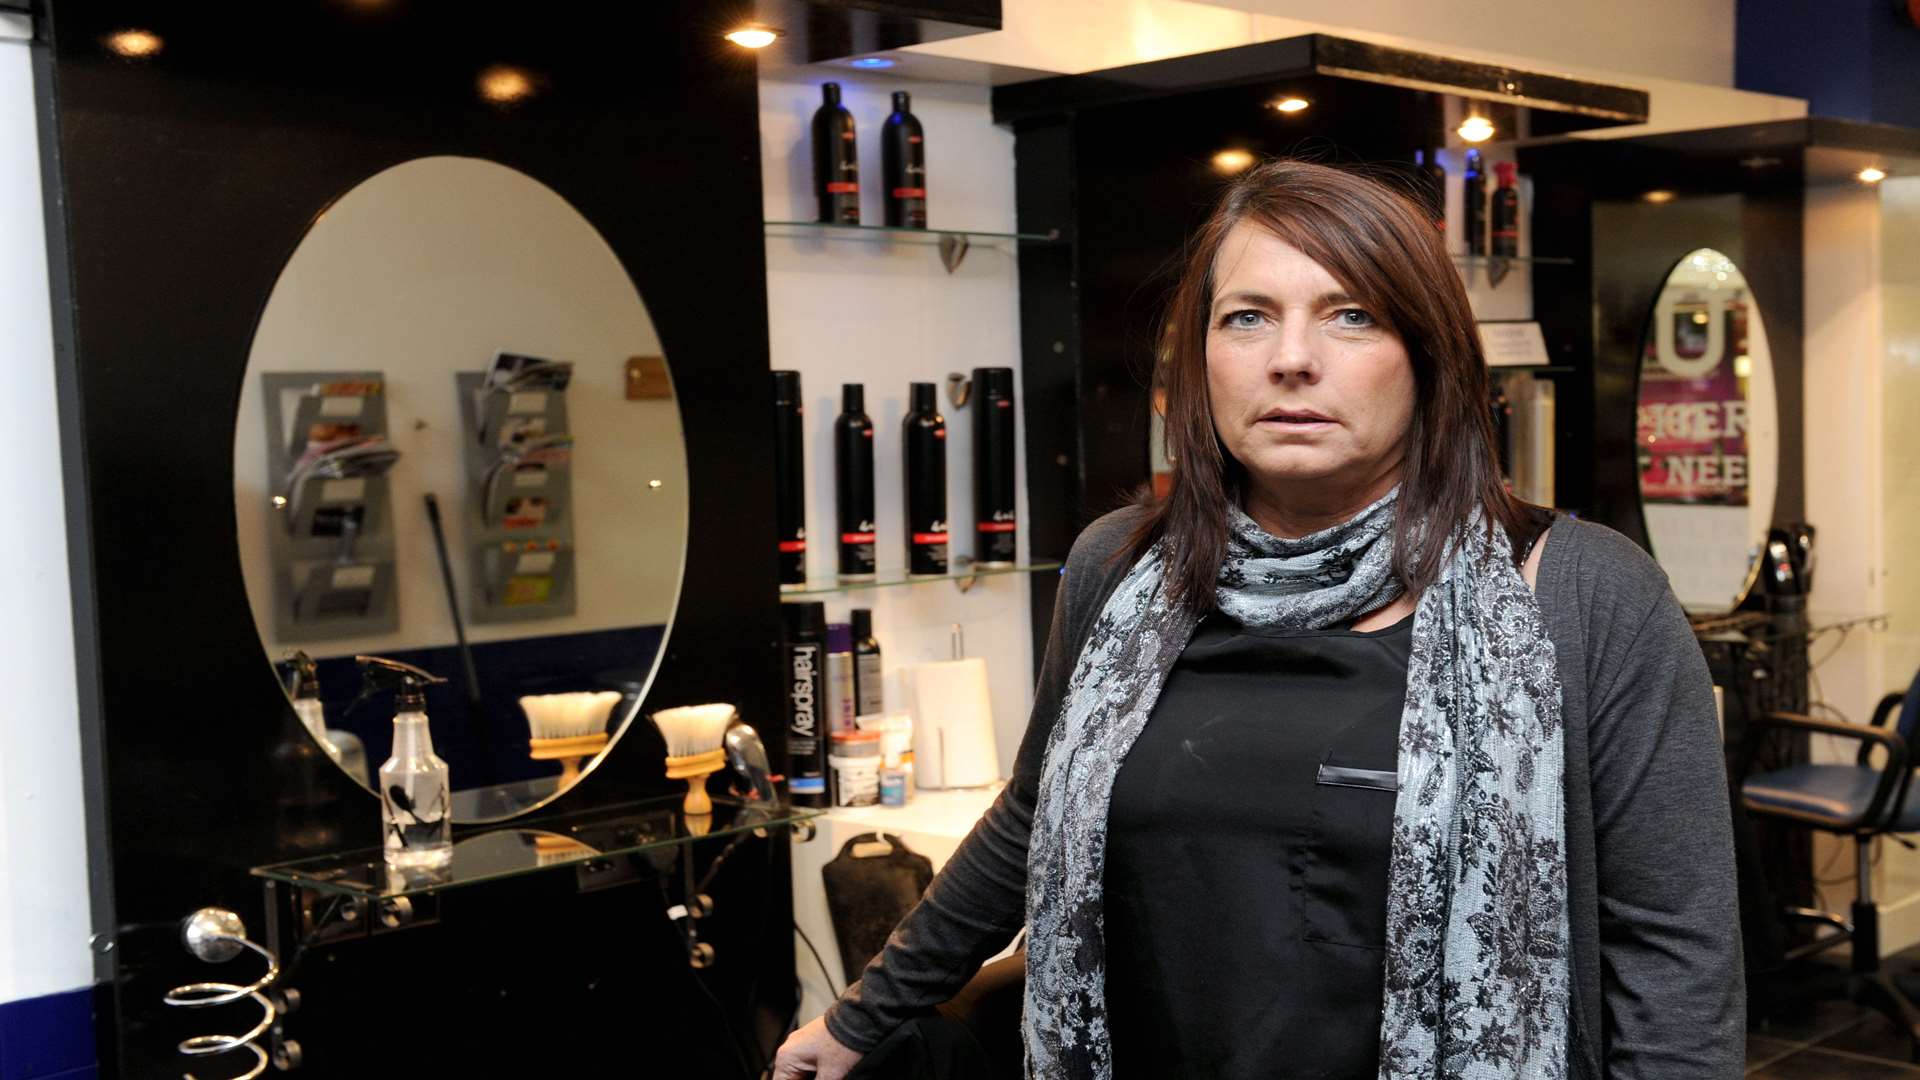 Cindy Meggs, owner of Top Cut salon